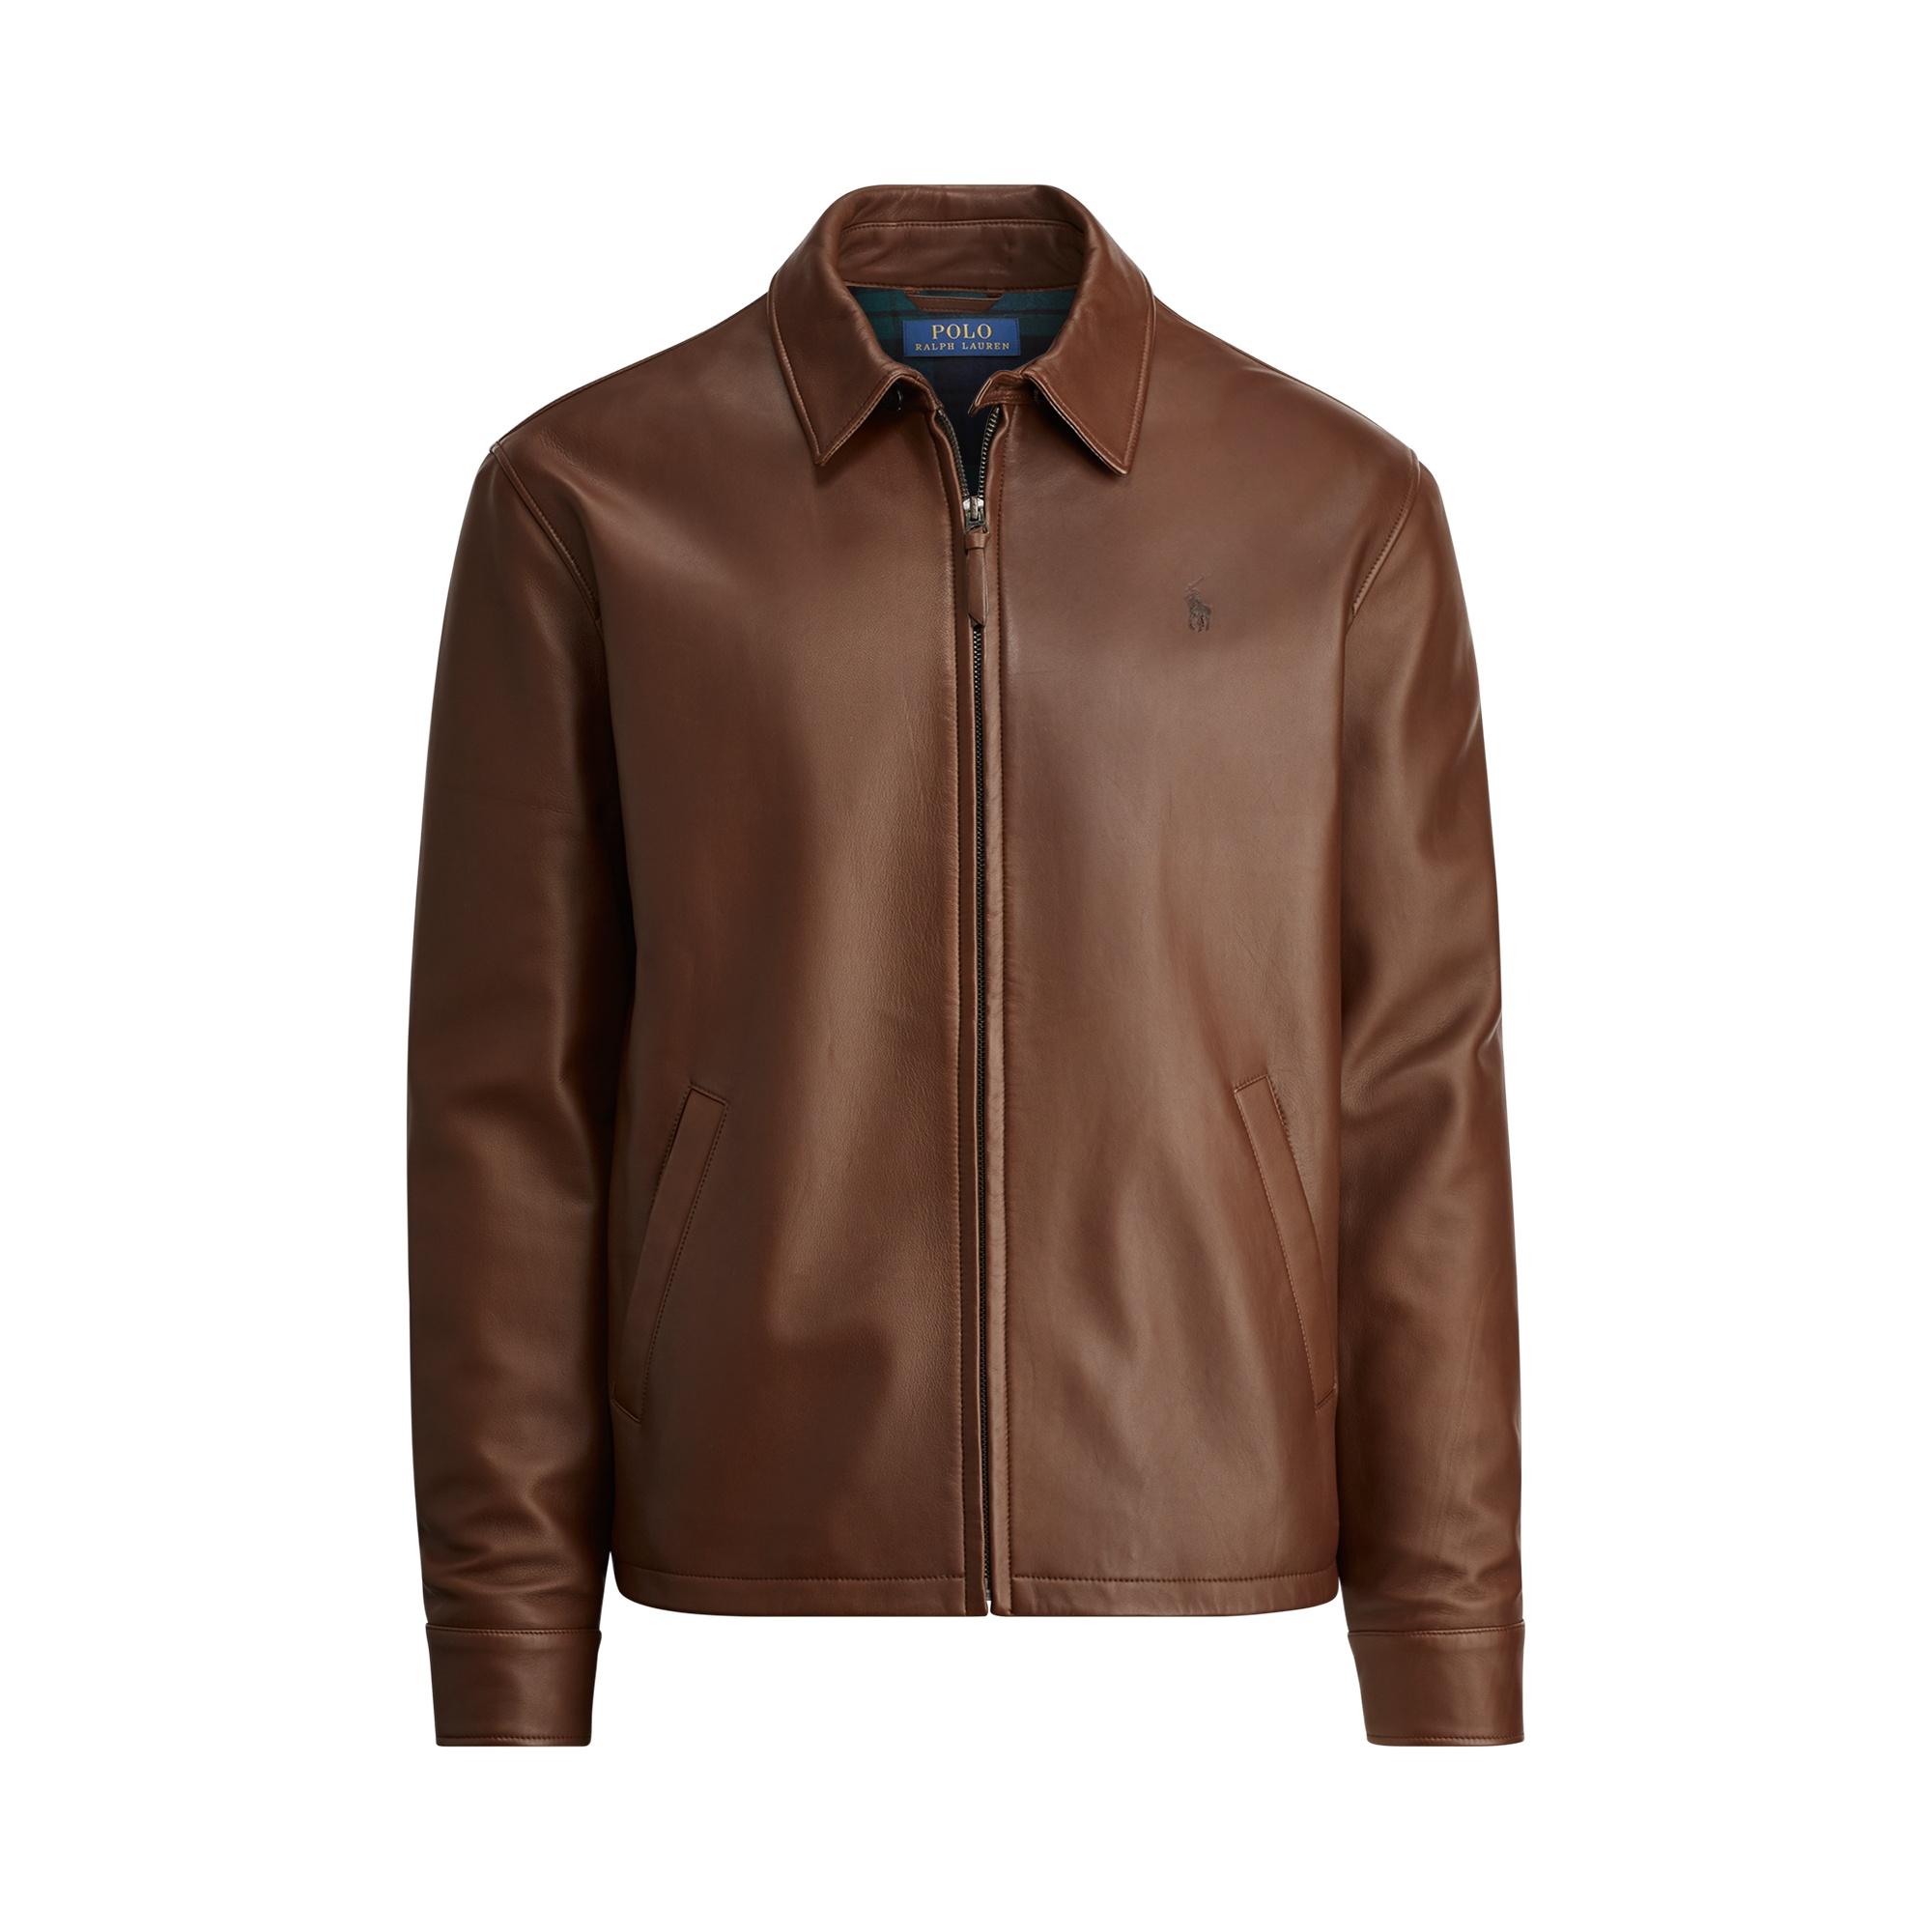 leather jacket polo ralph lauren